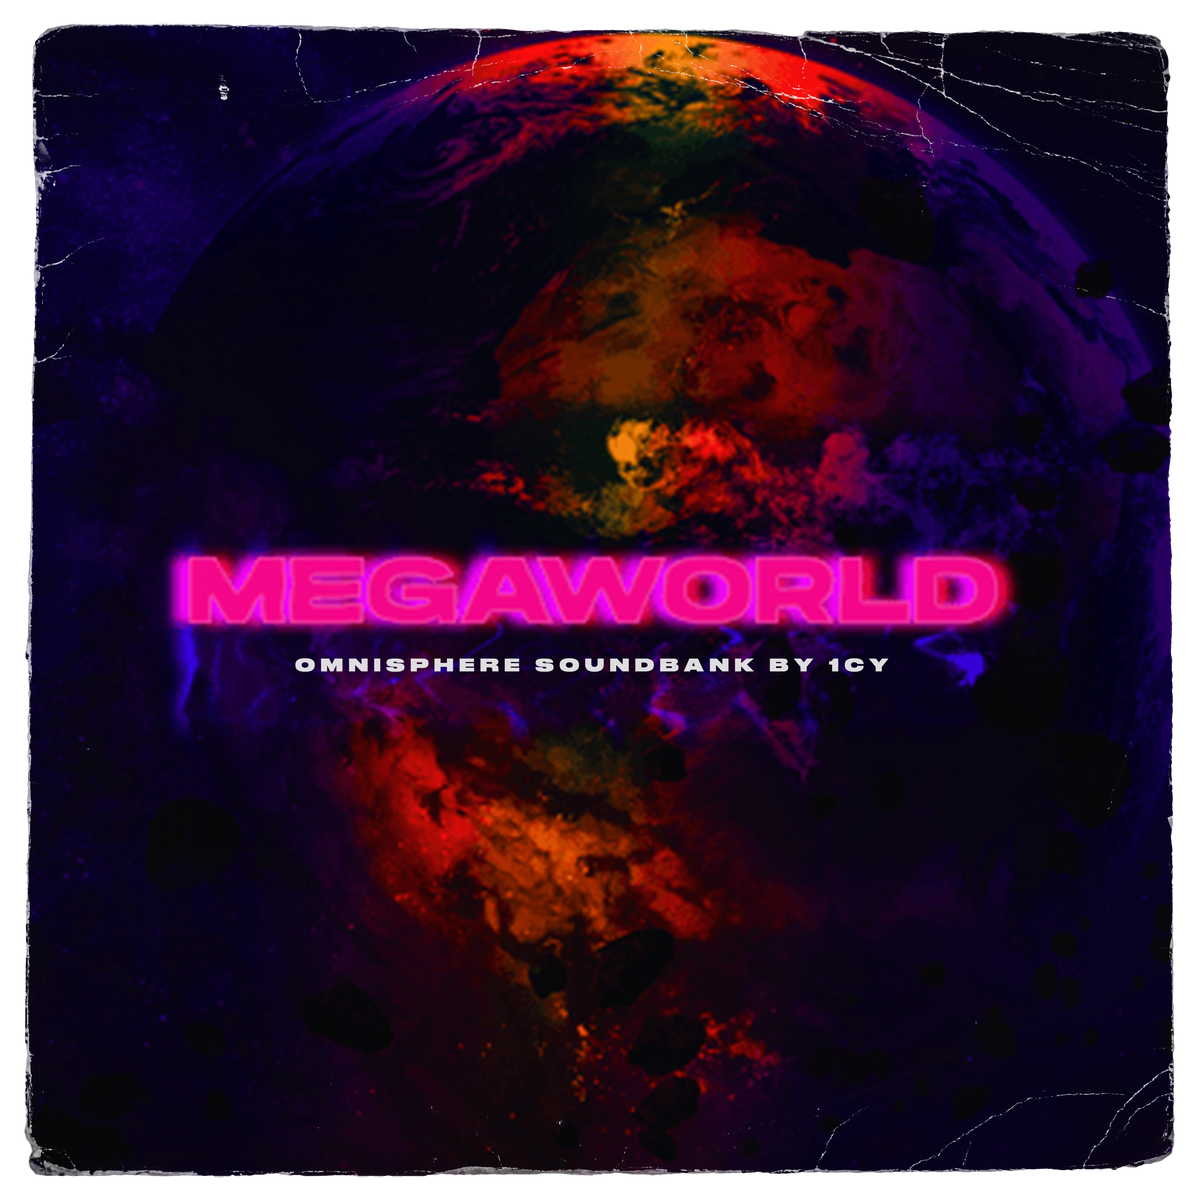 MEGAWORLD Vol. I - Omnisphere SoundBank